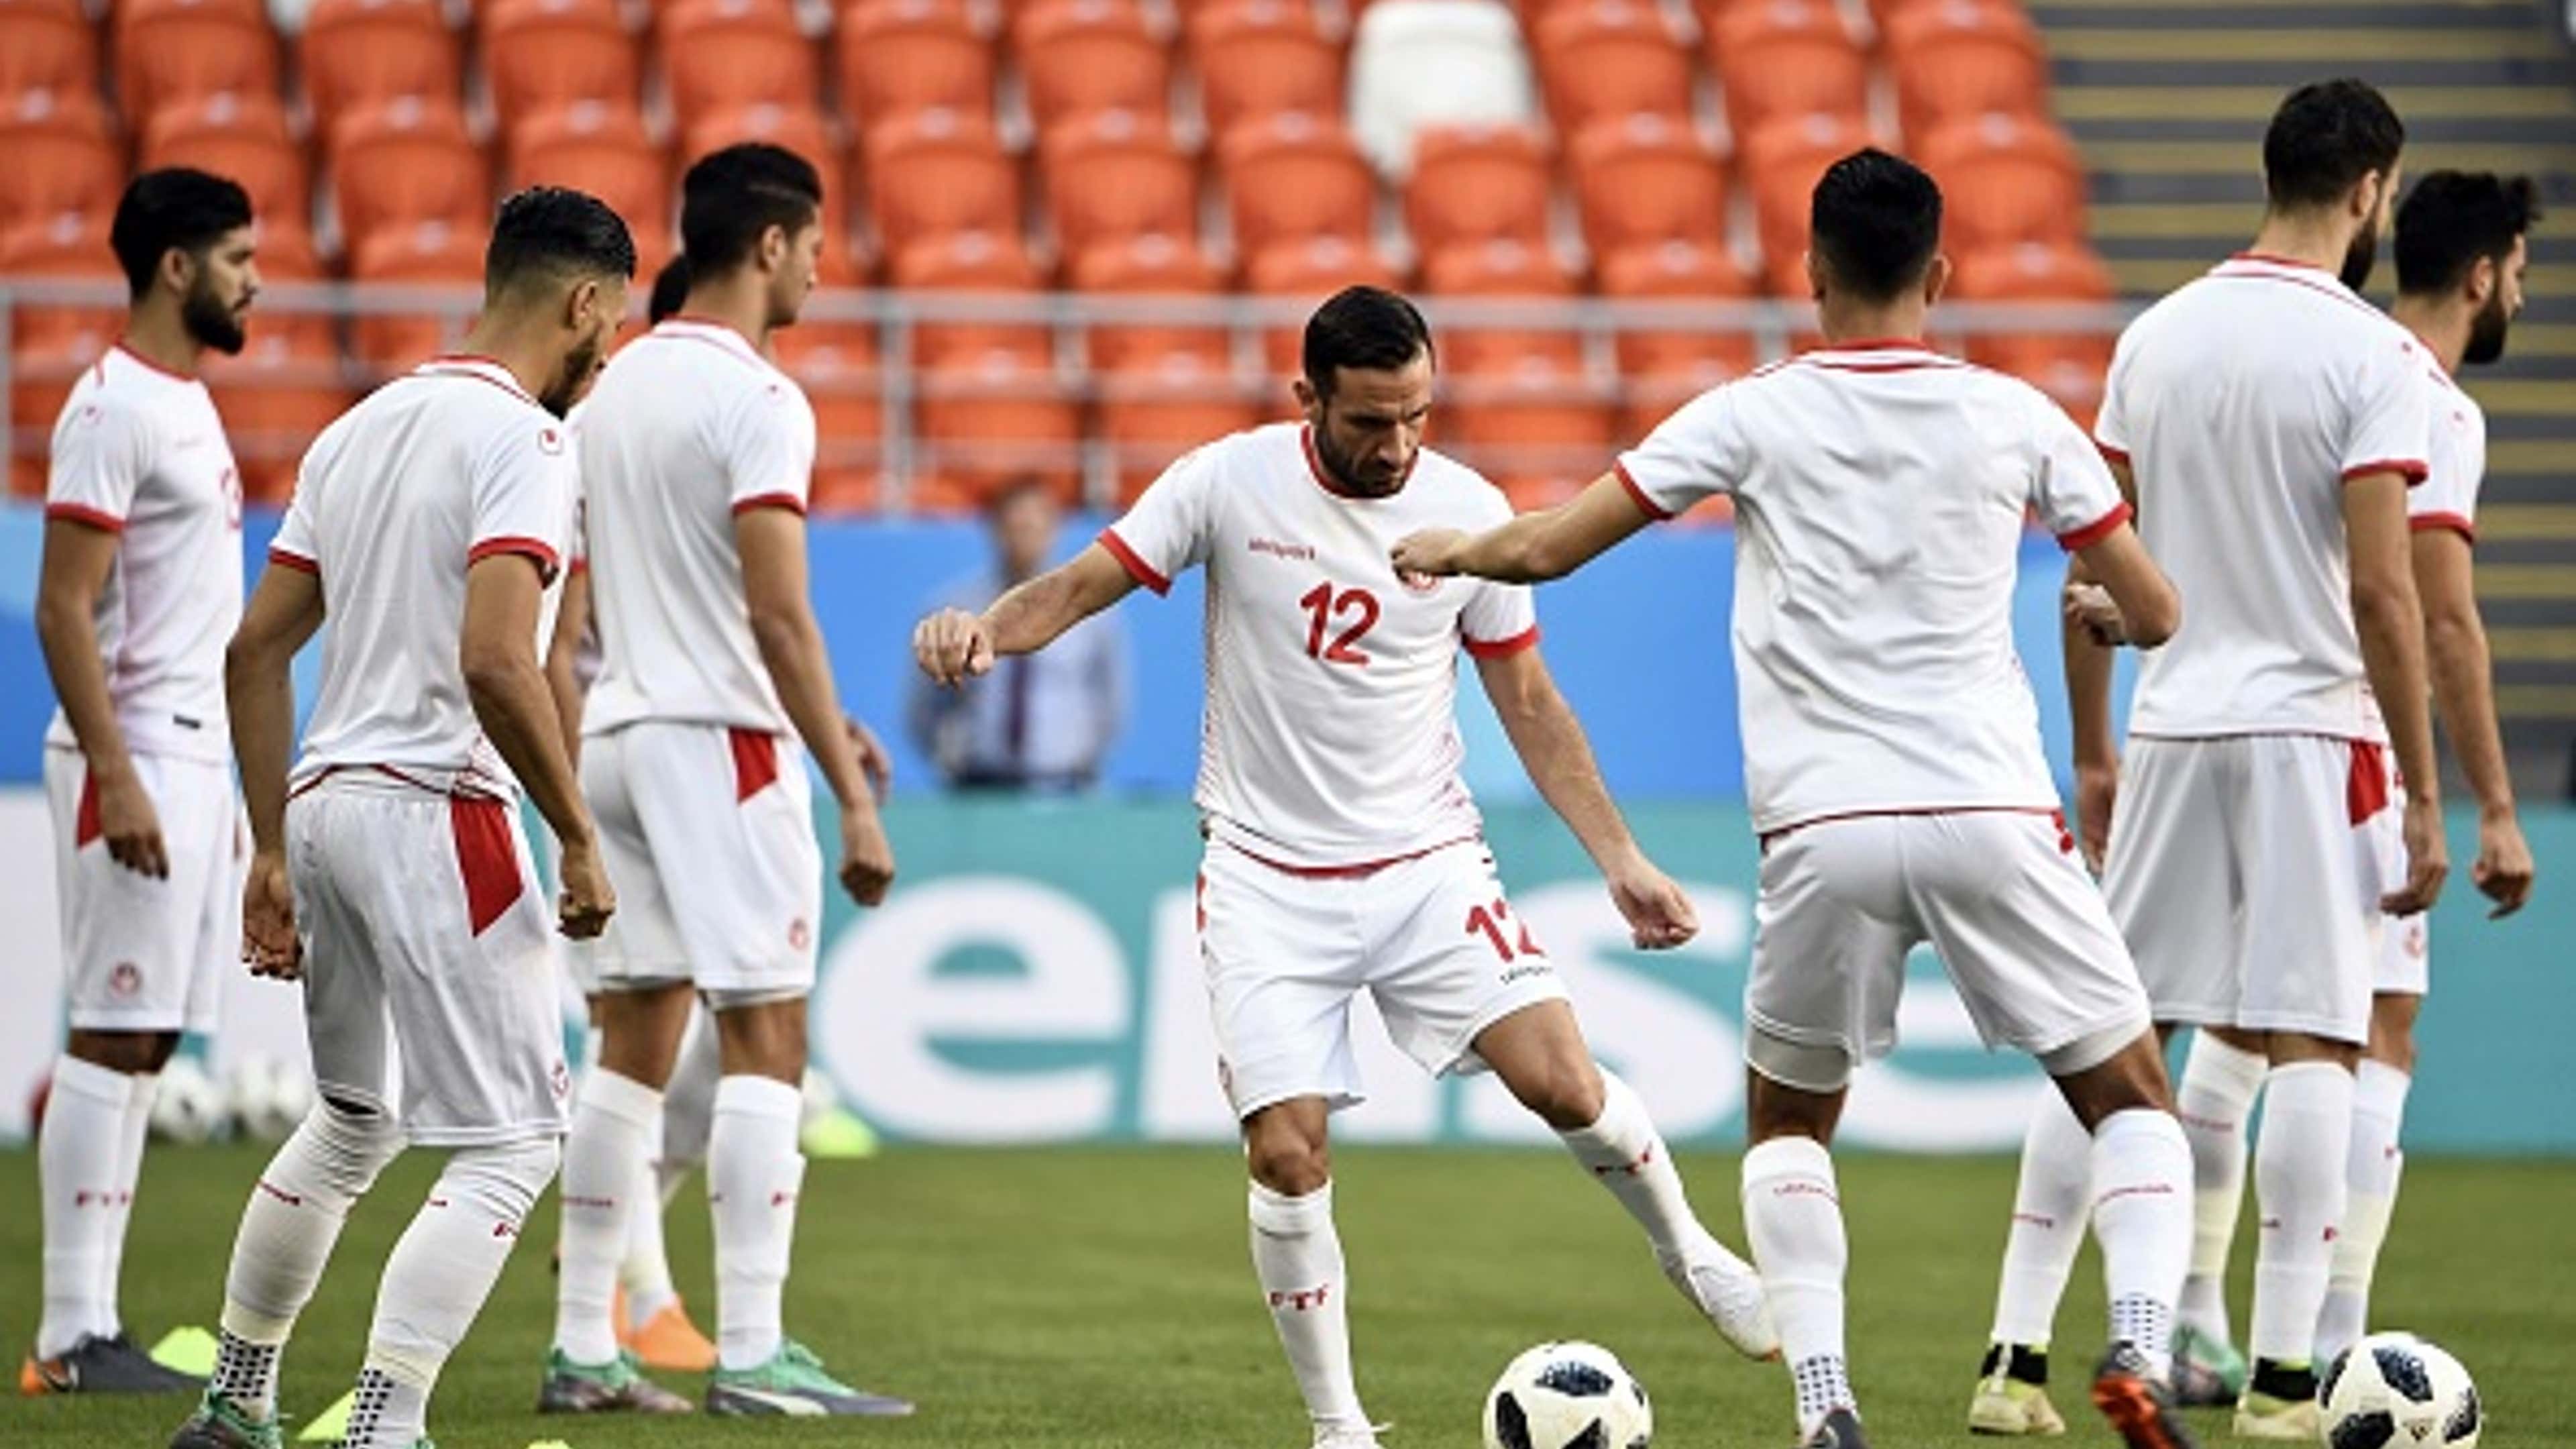 Tunisia - Ali Maaloul - Russia 2018 World Cup